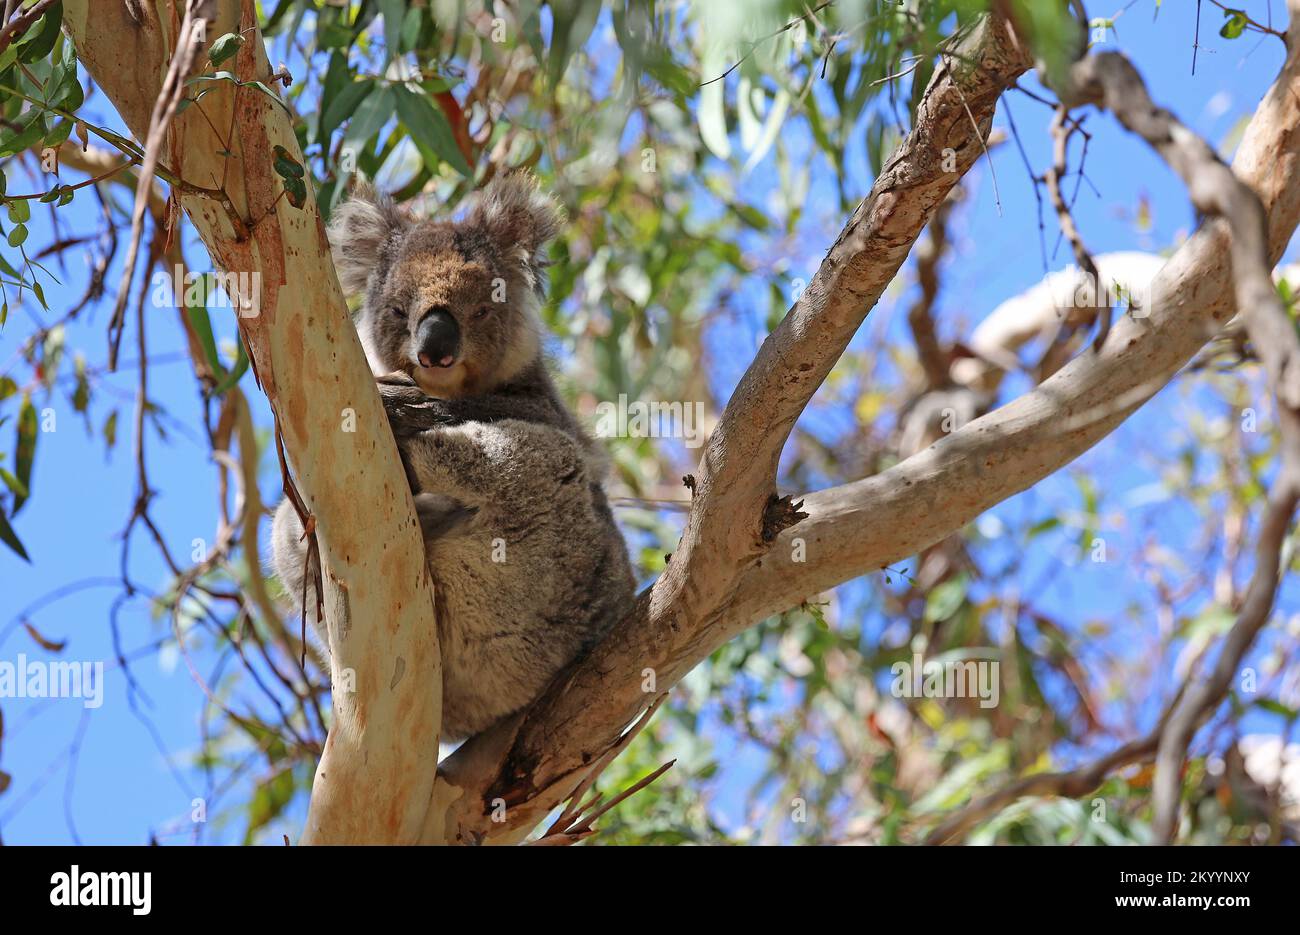 Young Koala - Australia Stock Photo